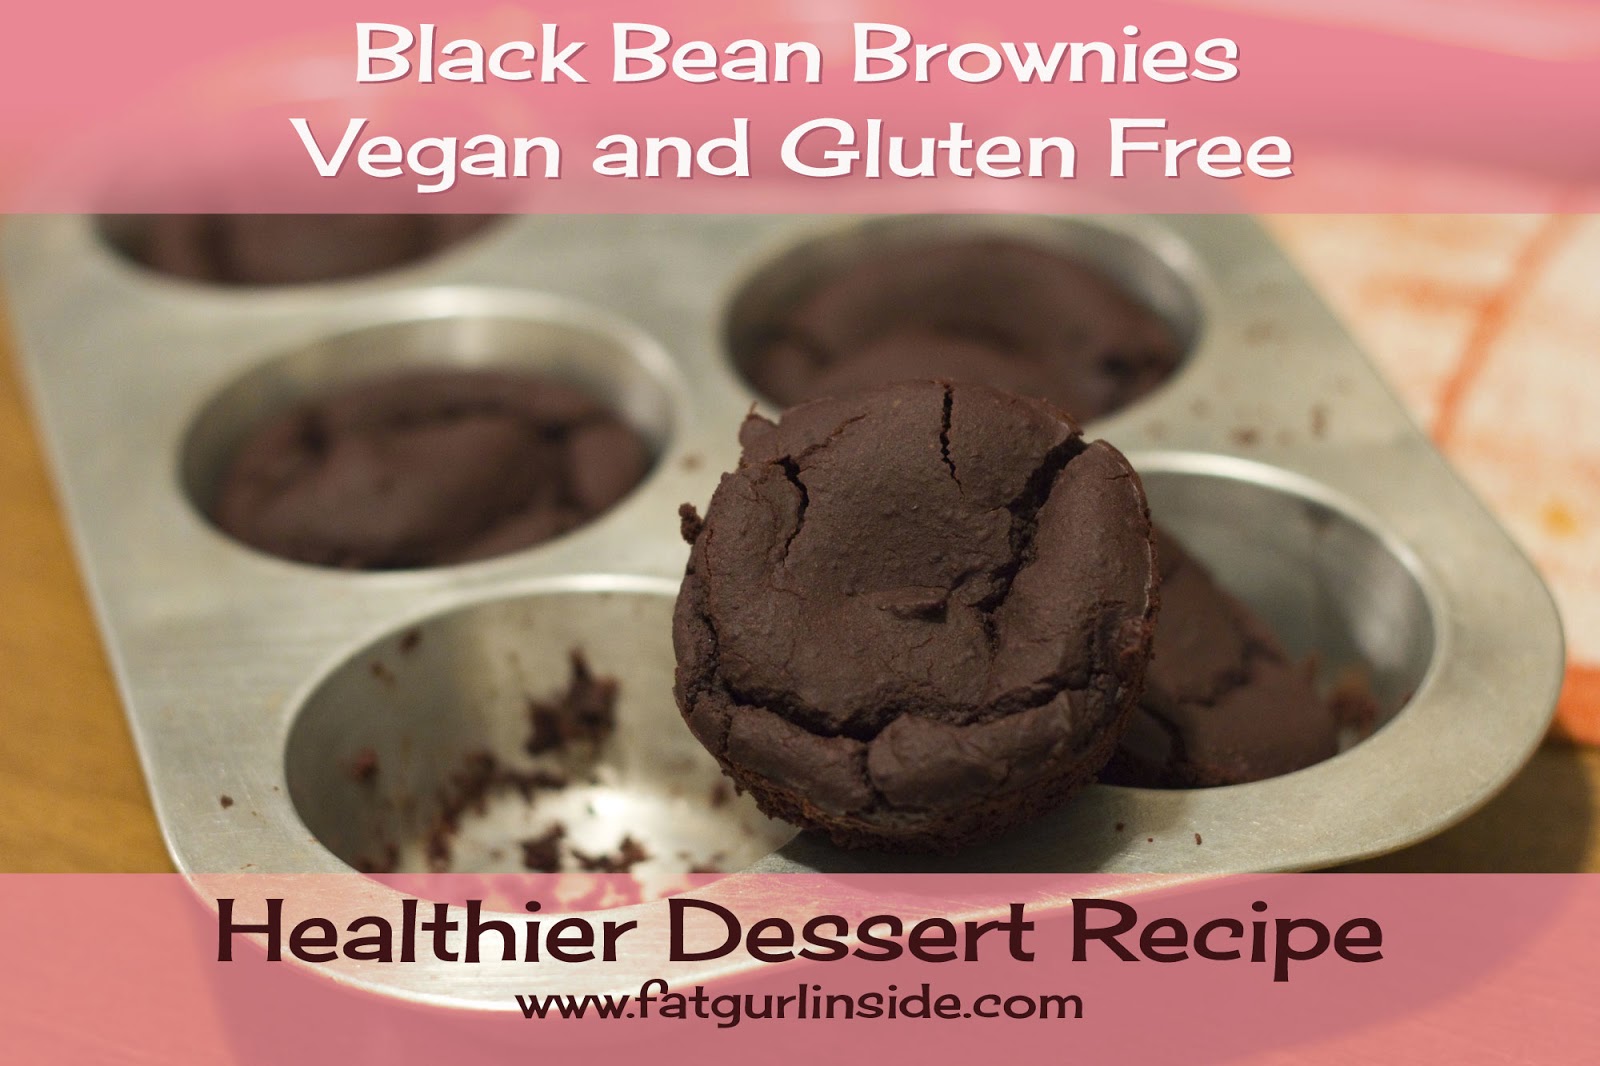 Black Bean Brownies Vegan and Gluten Free